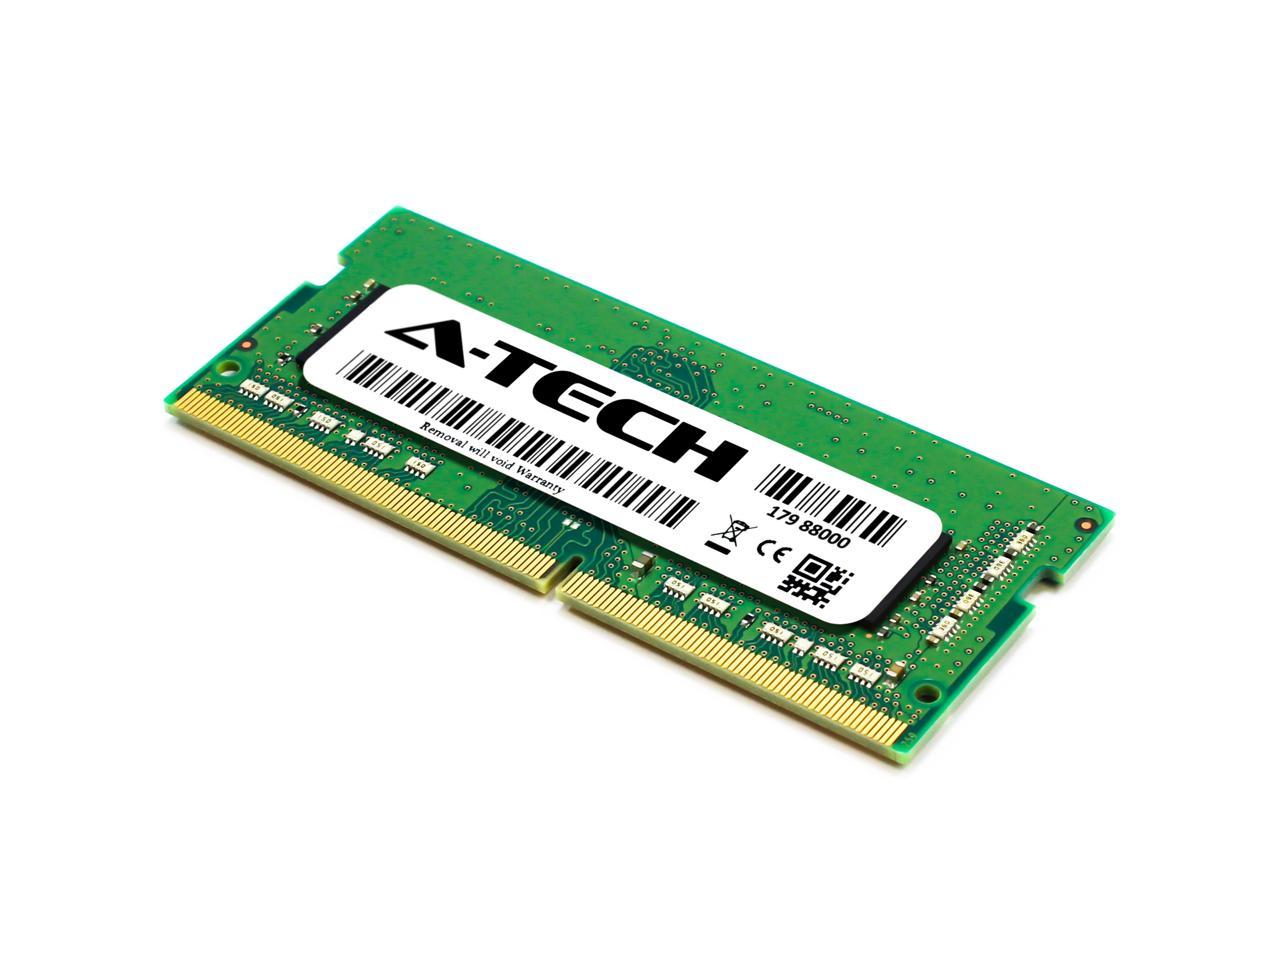 A-Tech 16GB DDR4 3200MHz SODIMM PC4-25600 Non-ECC Unbuffered CL22 1.2V  260-Pin SO-DIMM Laptop Notebook Computer RAM Memory Upgrade Module